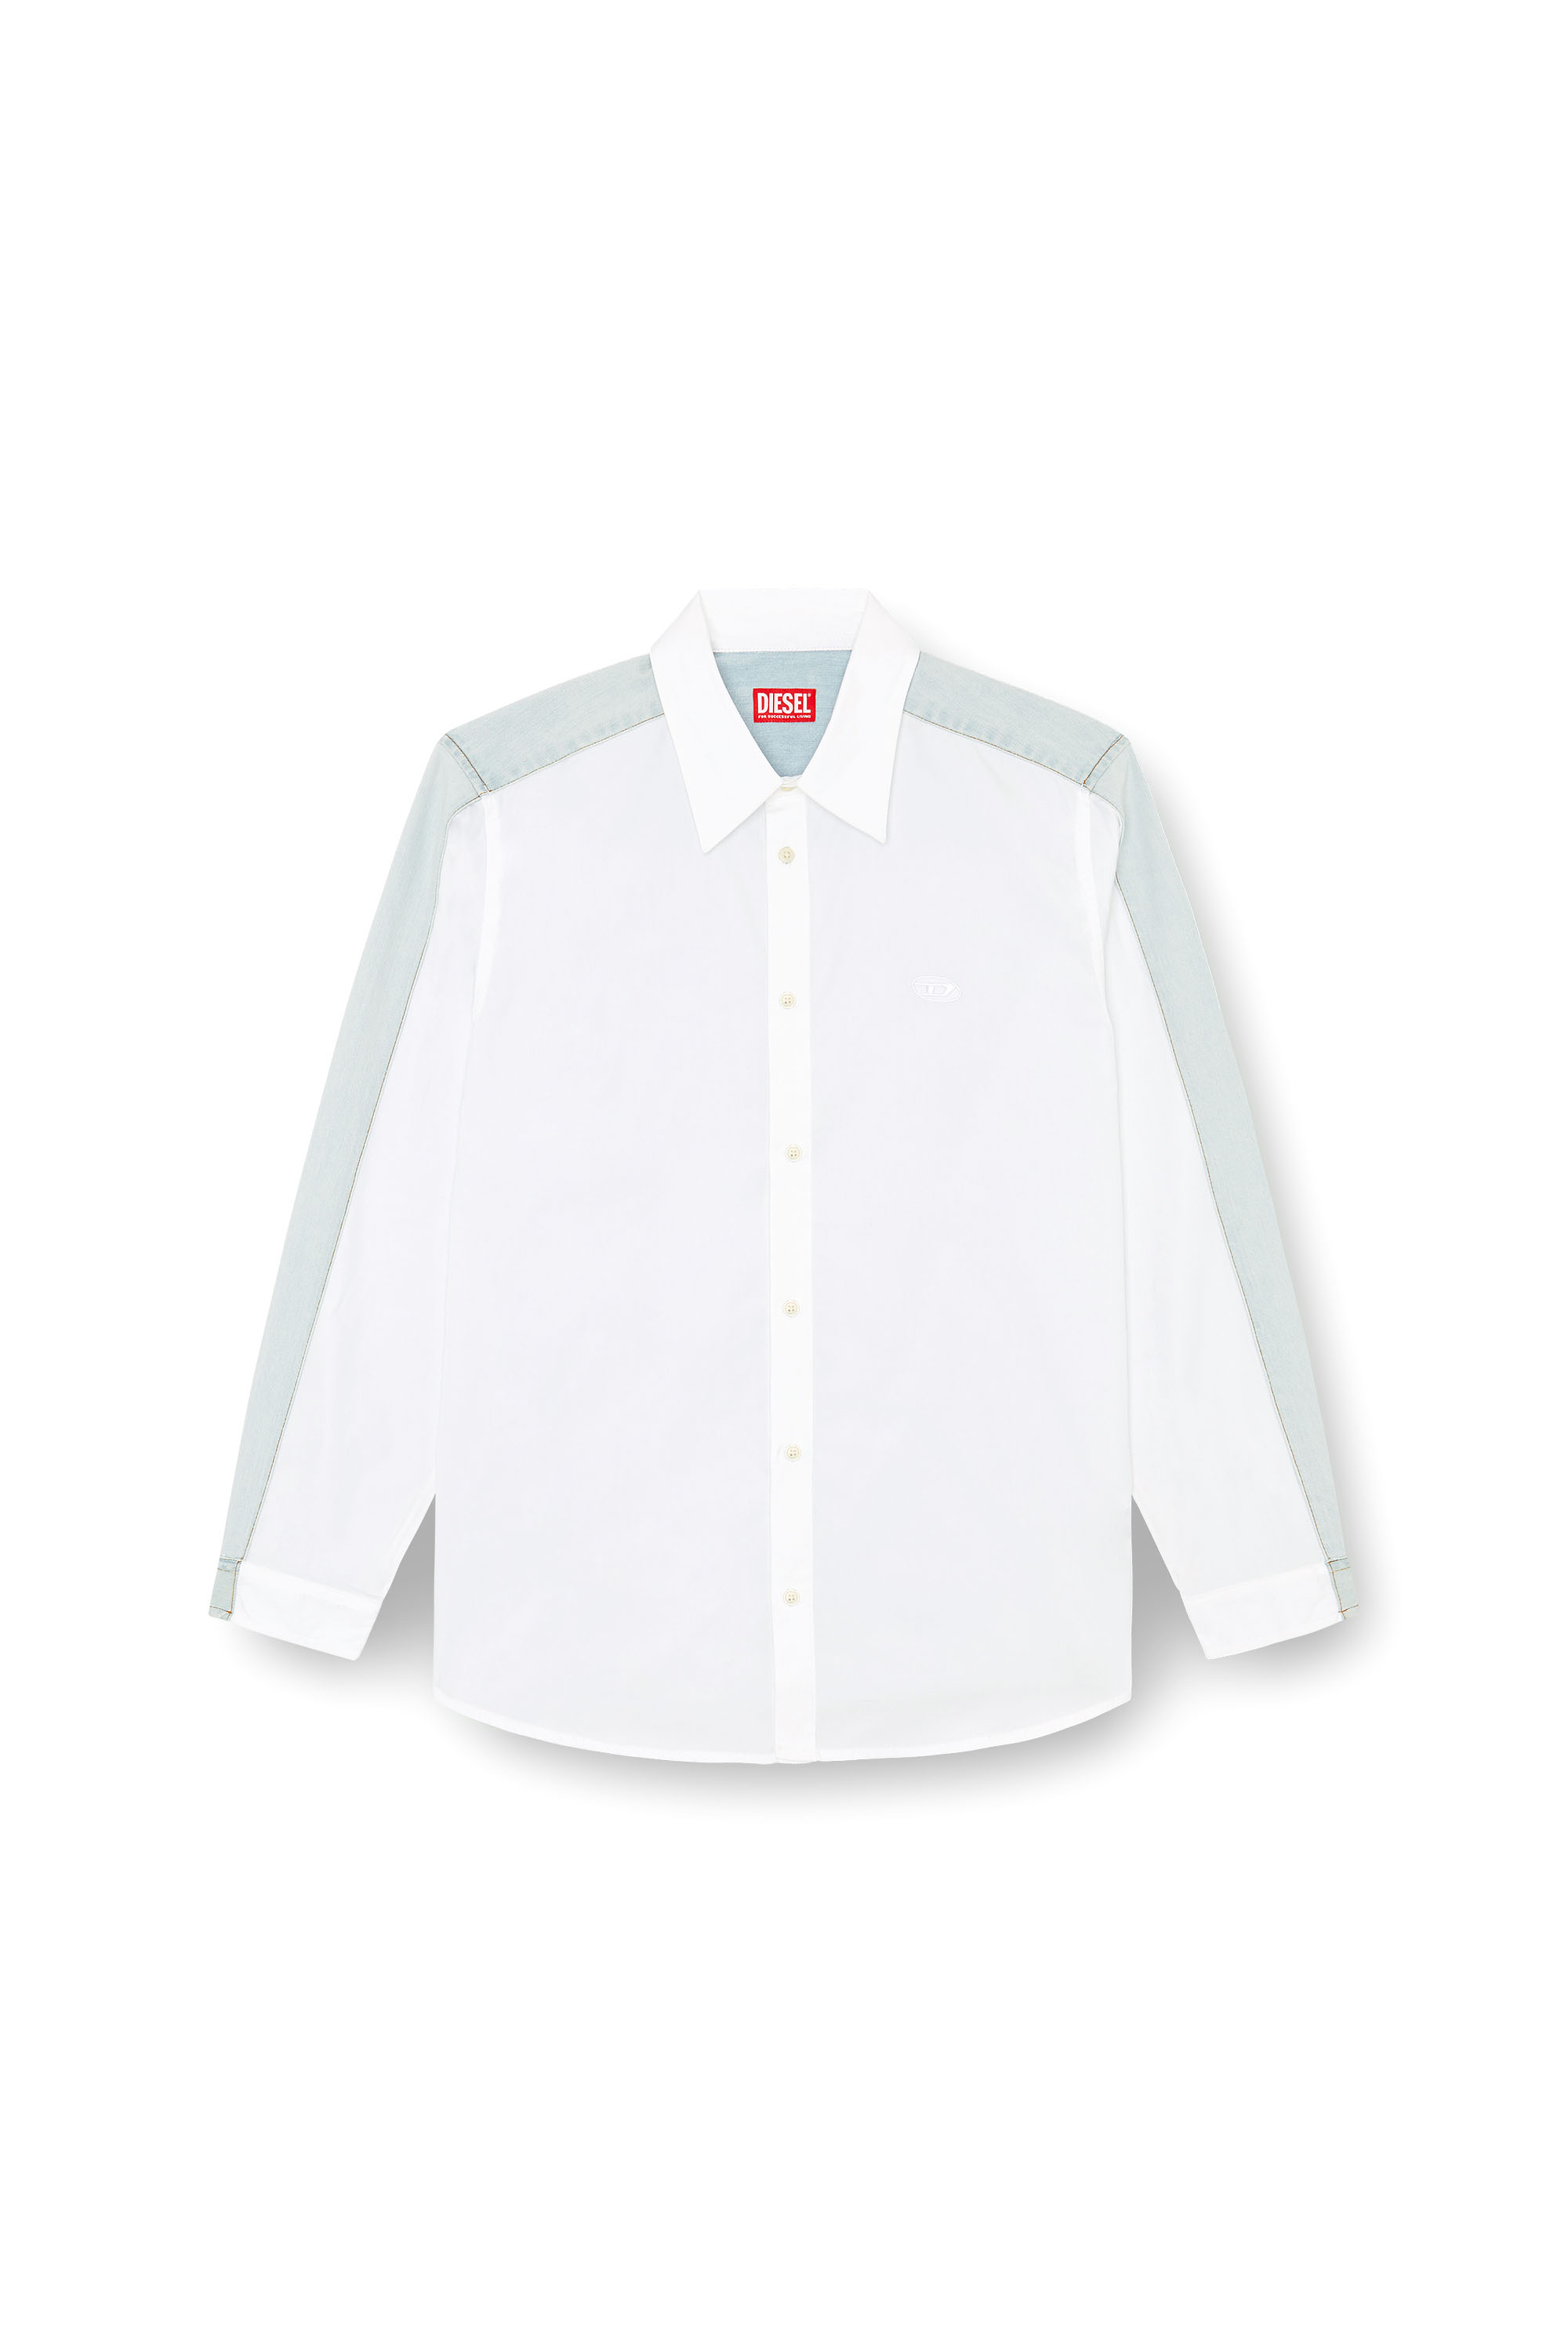 Diesel - S-SIMPLY-DNM, Male Shirt in cotton poplin and denim in マルチカラー - Image 3